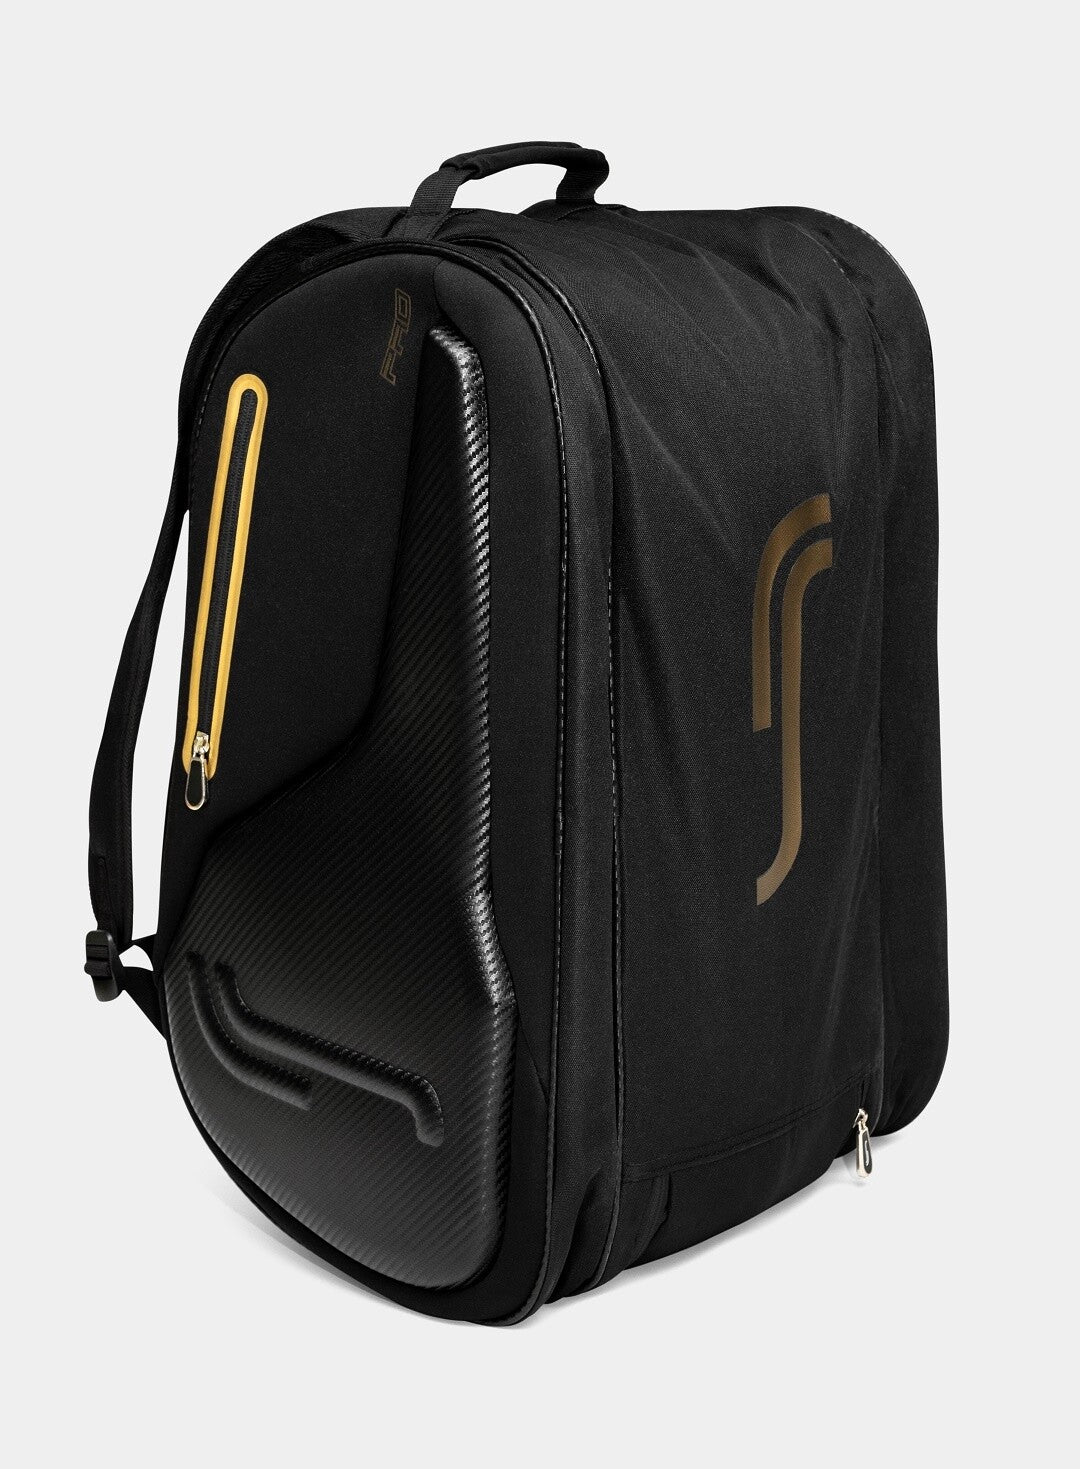 RS Pro Padel Bag Black & Gold